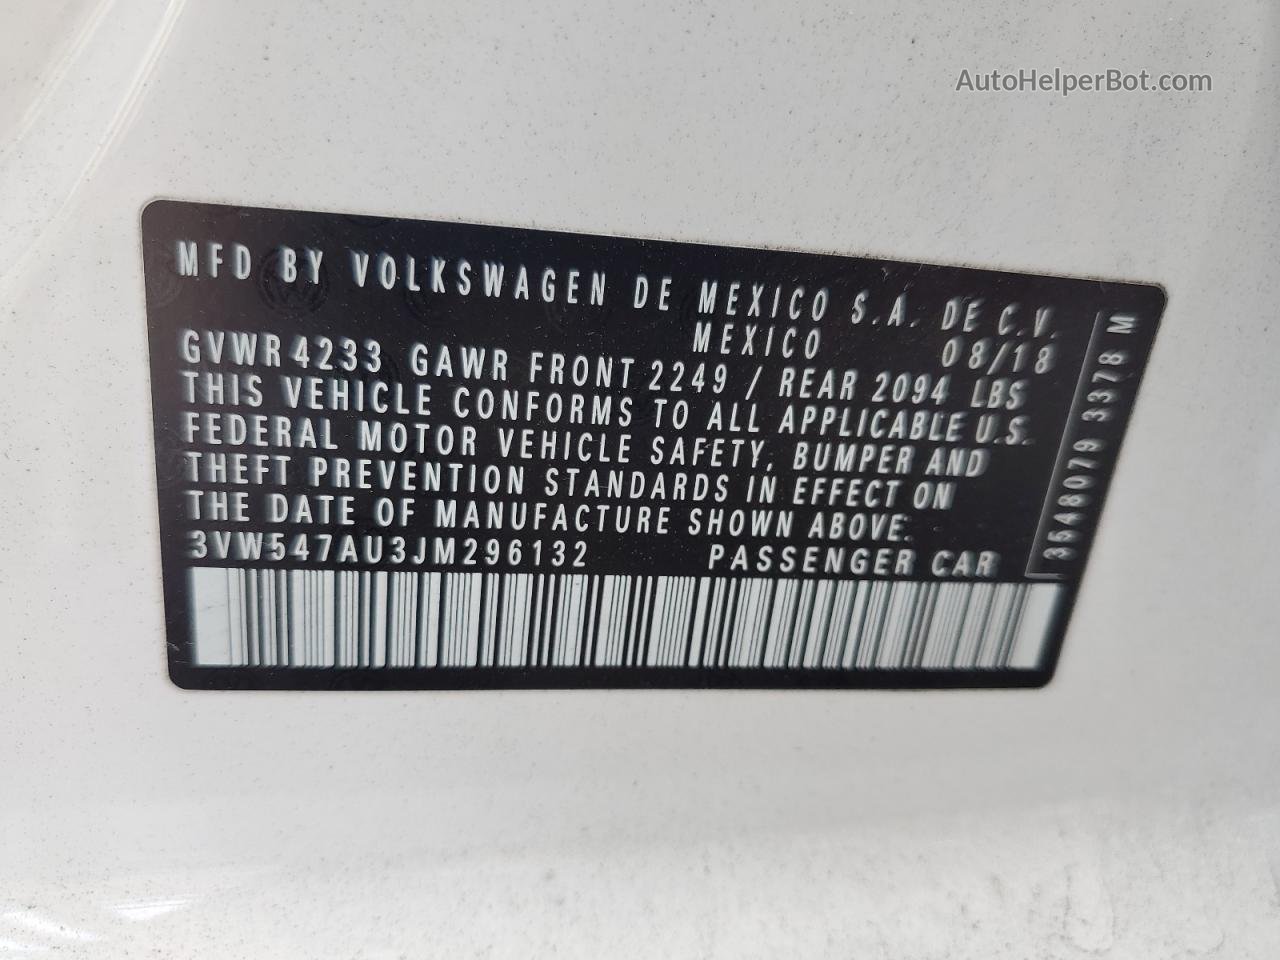 2018 Volkswagen Gti S White vin: 3VW547AU3JM296132